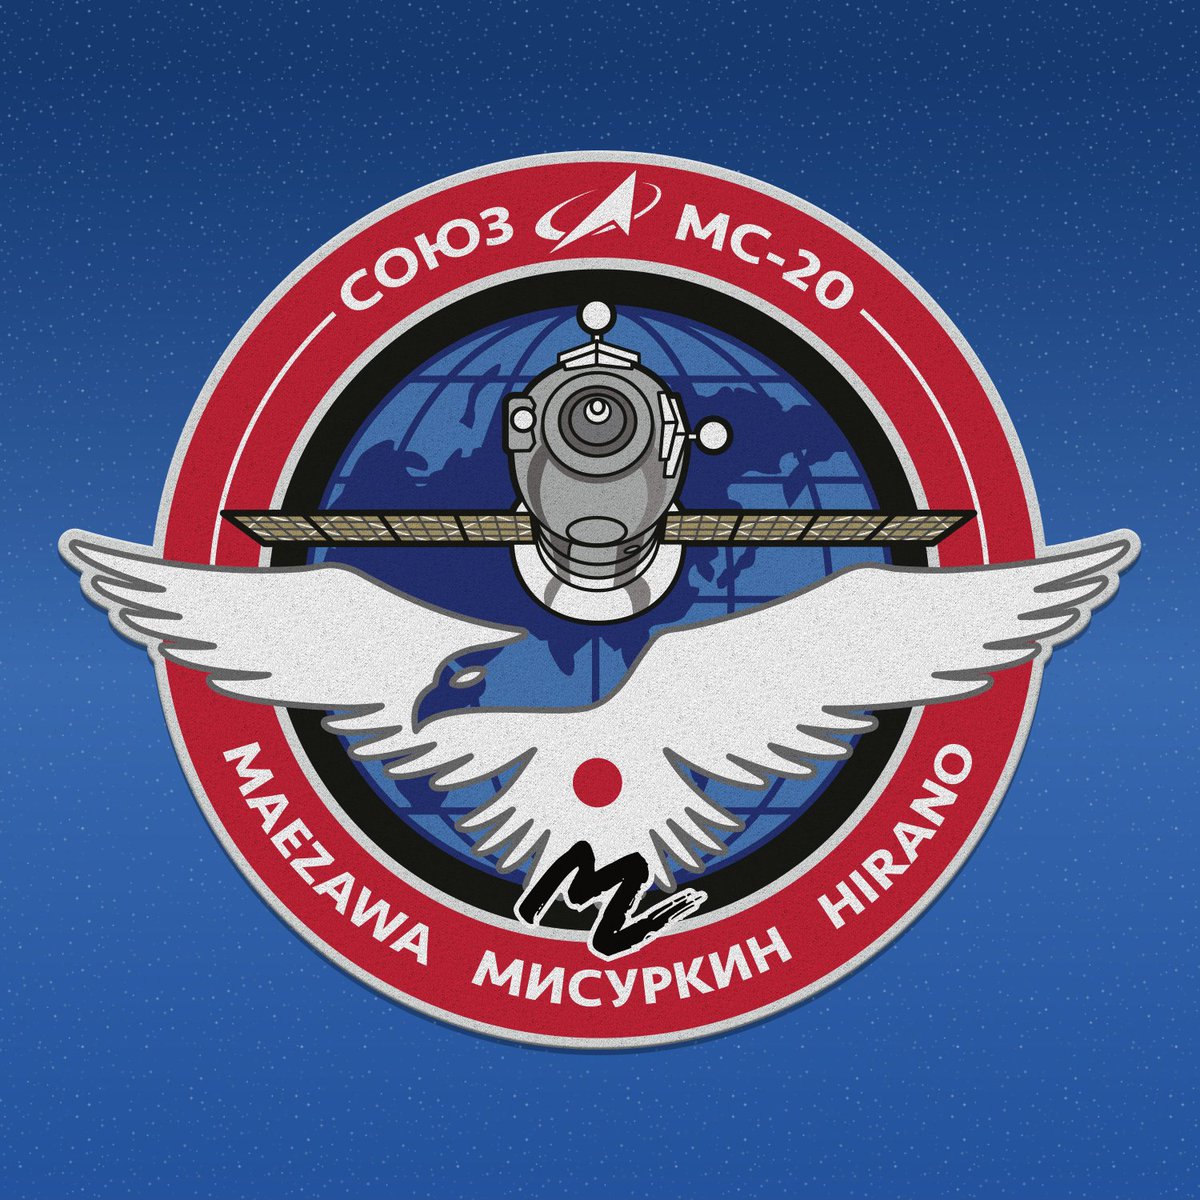 Ecusson Soyouz MS-20 mission © Roscosmos